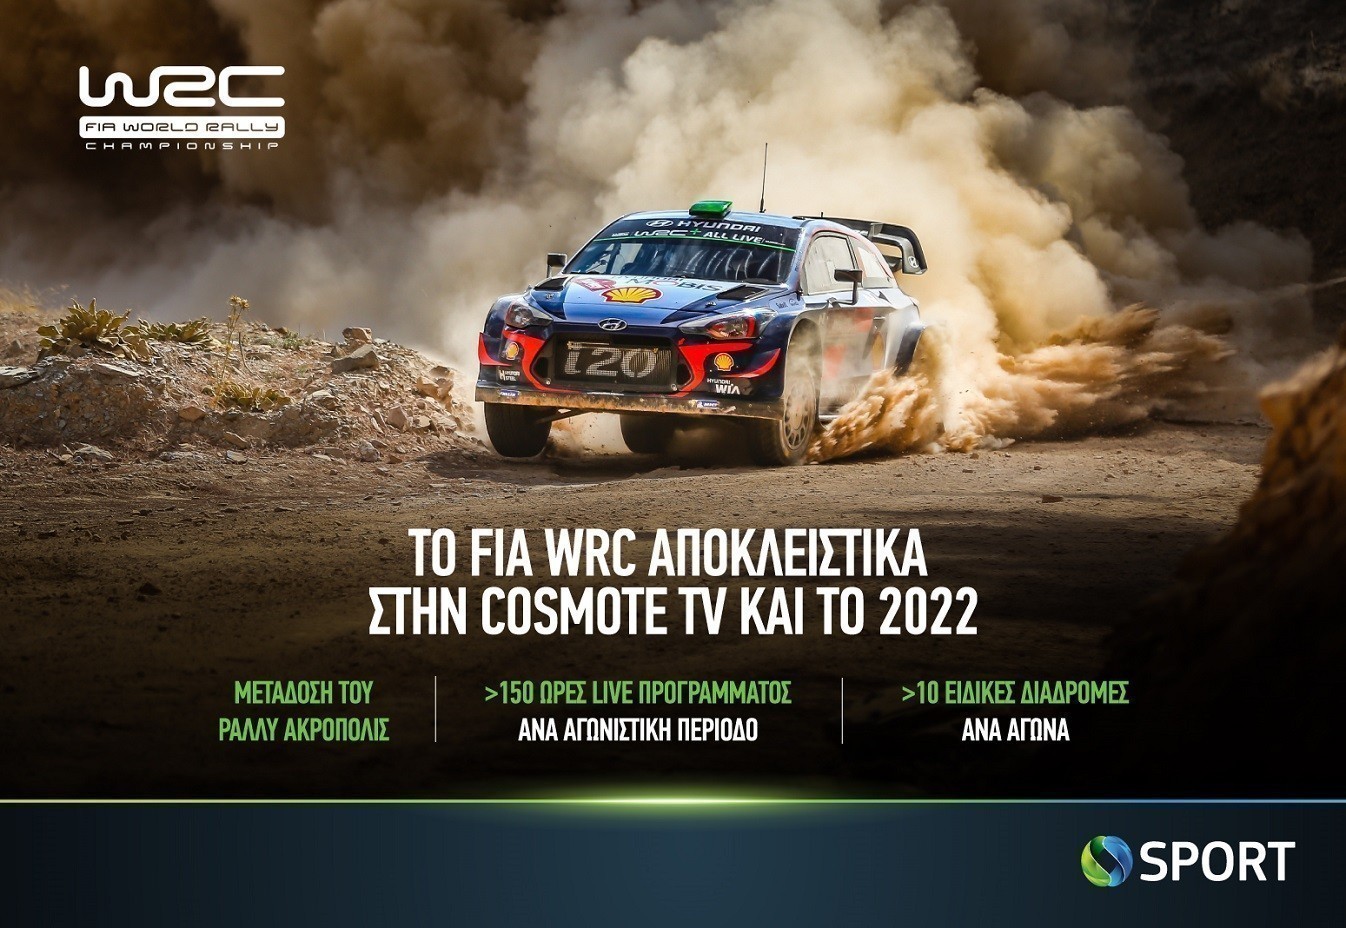 FIA World Rally Championship (WRC): Αποκλειστικά στην COSMOTE TV και την επόμενη χρονιά (vid)